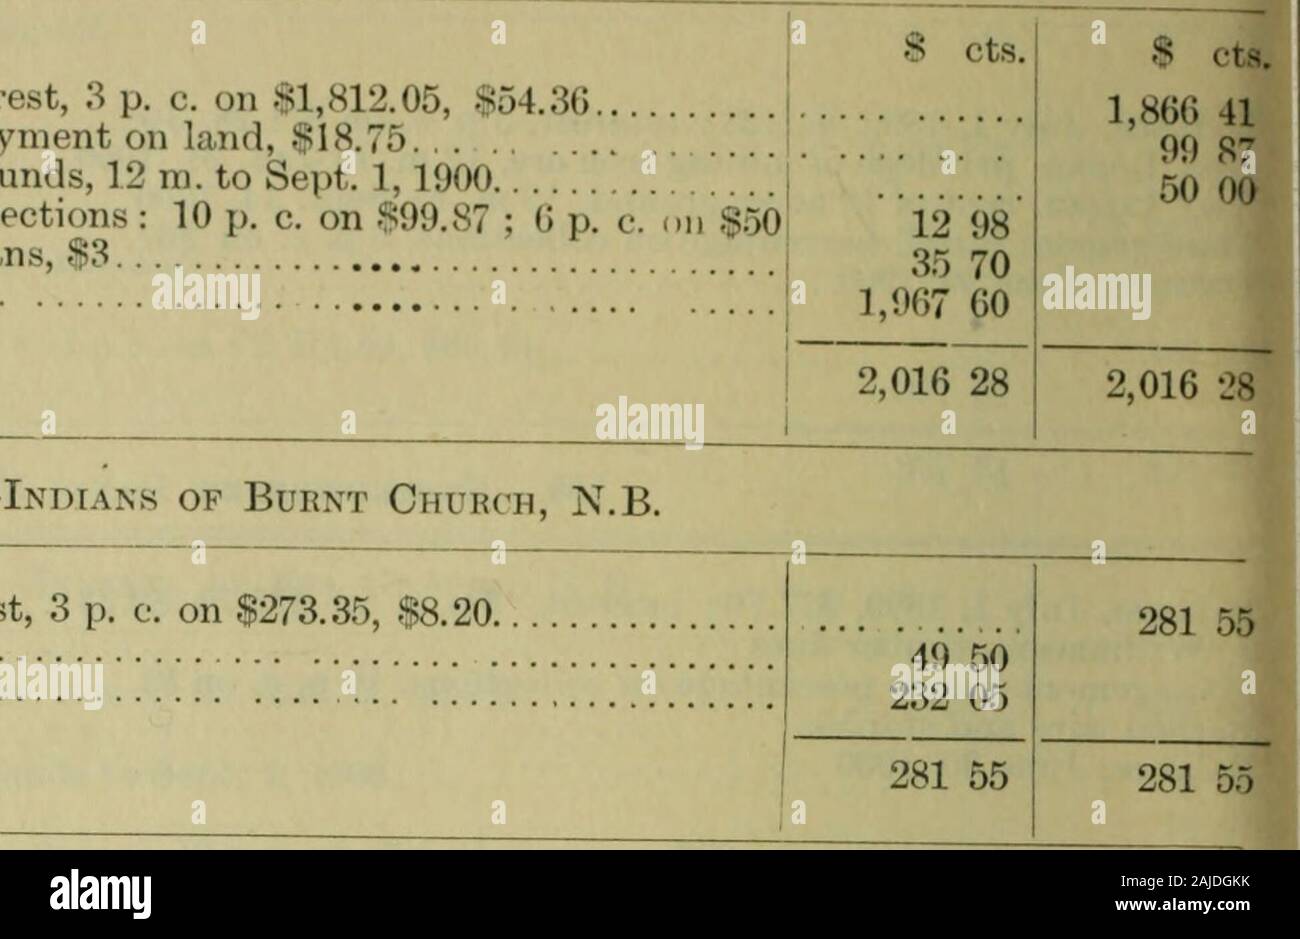 Report of the Auditor General to the House of Commons (for the years 1899-1900) . $100 10V LBretin, §171.10 ; Robt, Crawford, $1,111.27 ; R.& W. Crawford, $87.20 ; J A*Davis, $85.75; E. E. Dixon, $274.15; J. H. Drewes, $47.35; Win. Drewes$60 ; S. L. Fife, $175.57 ; T. Fulton, $55; J. Haskin, $83.44 ; G. Henschel$77.70 ; G. Henkelmann, $81.80 ; T. Hewitt, $80.90; L. V. Hogan, $70 95F. R. Hoppe, $60 ; J. Hudson, $79.65 ; G. Jansey, $70.45; A. Klapsteim $72 :S. Klapstein, $299.99; G. Kuhn, $60 ; M. Kruger, $83.70 ; H. Little, $100 ;C. Maver, $75.10; A. Mingas, $80.90; D. & A. McDonald, $89; E. Mc Stock Photo